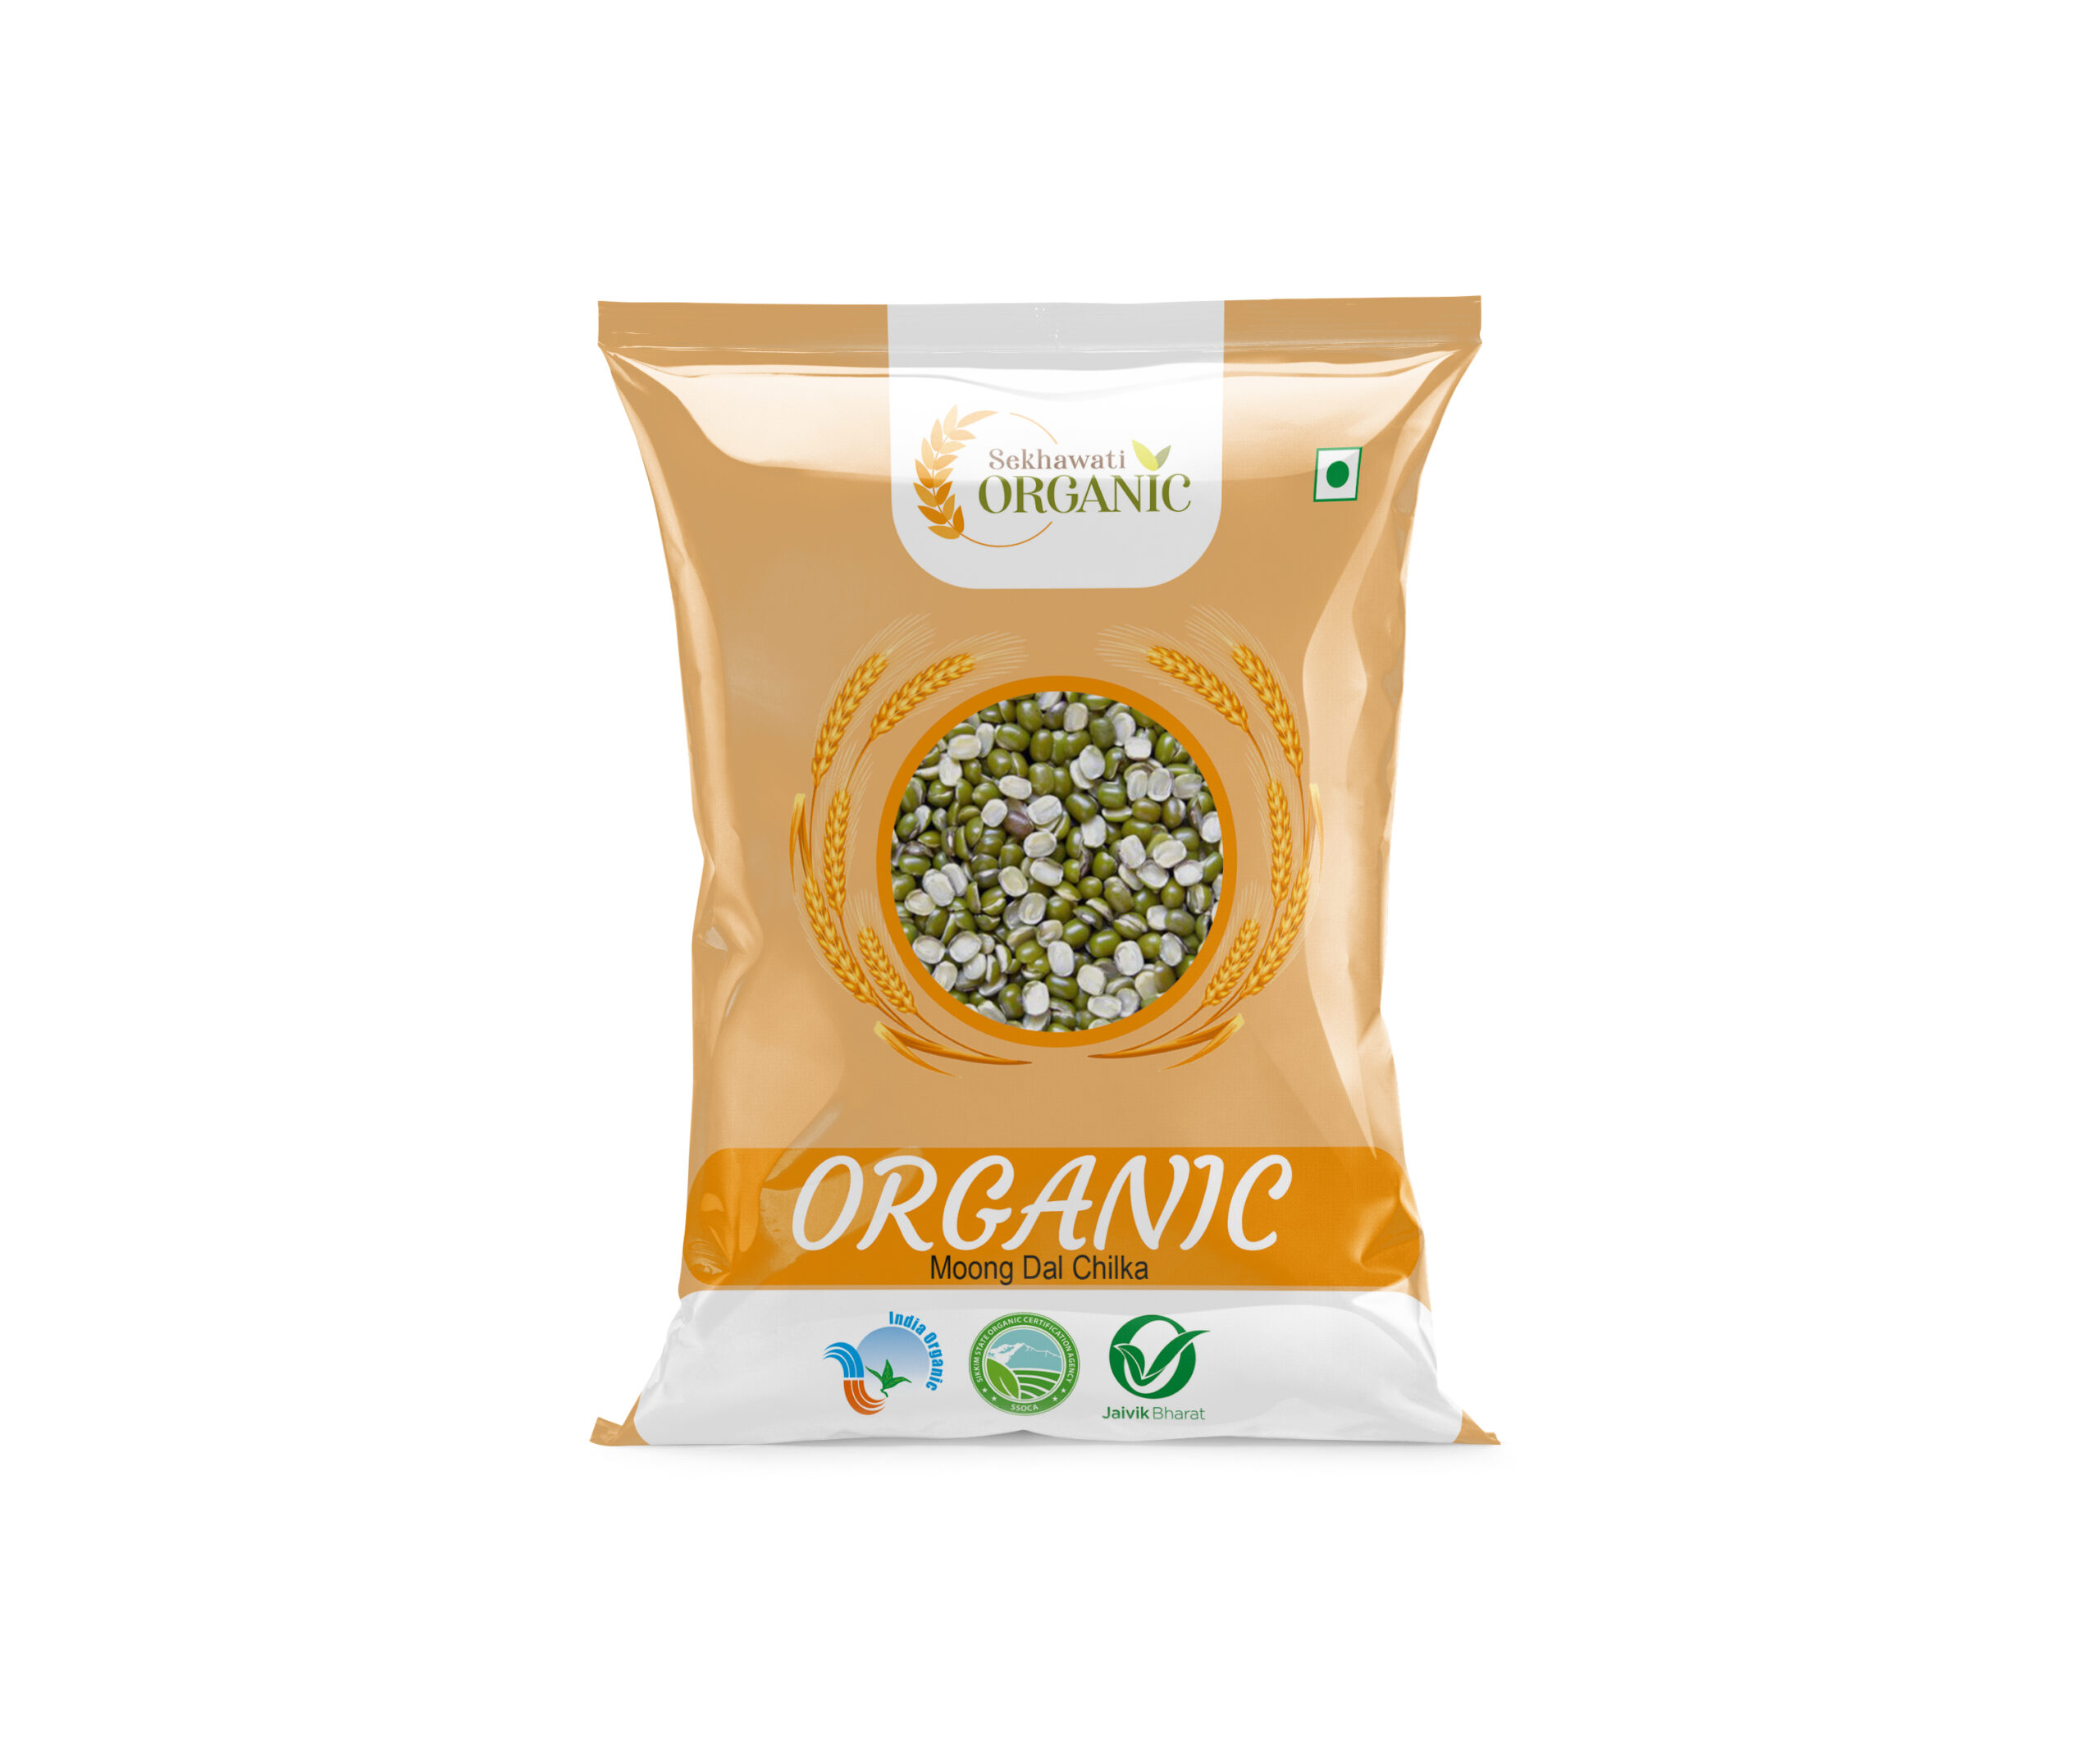 Organic Moong Dal Chilka 500g - Sekhawati Organic